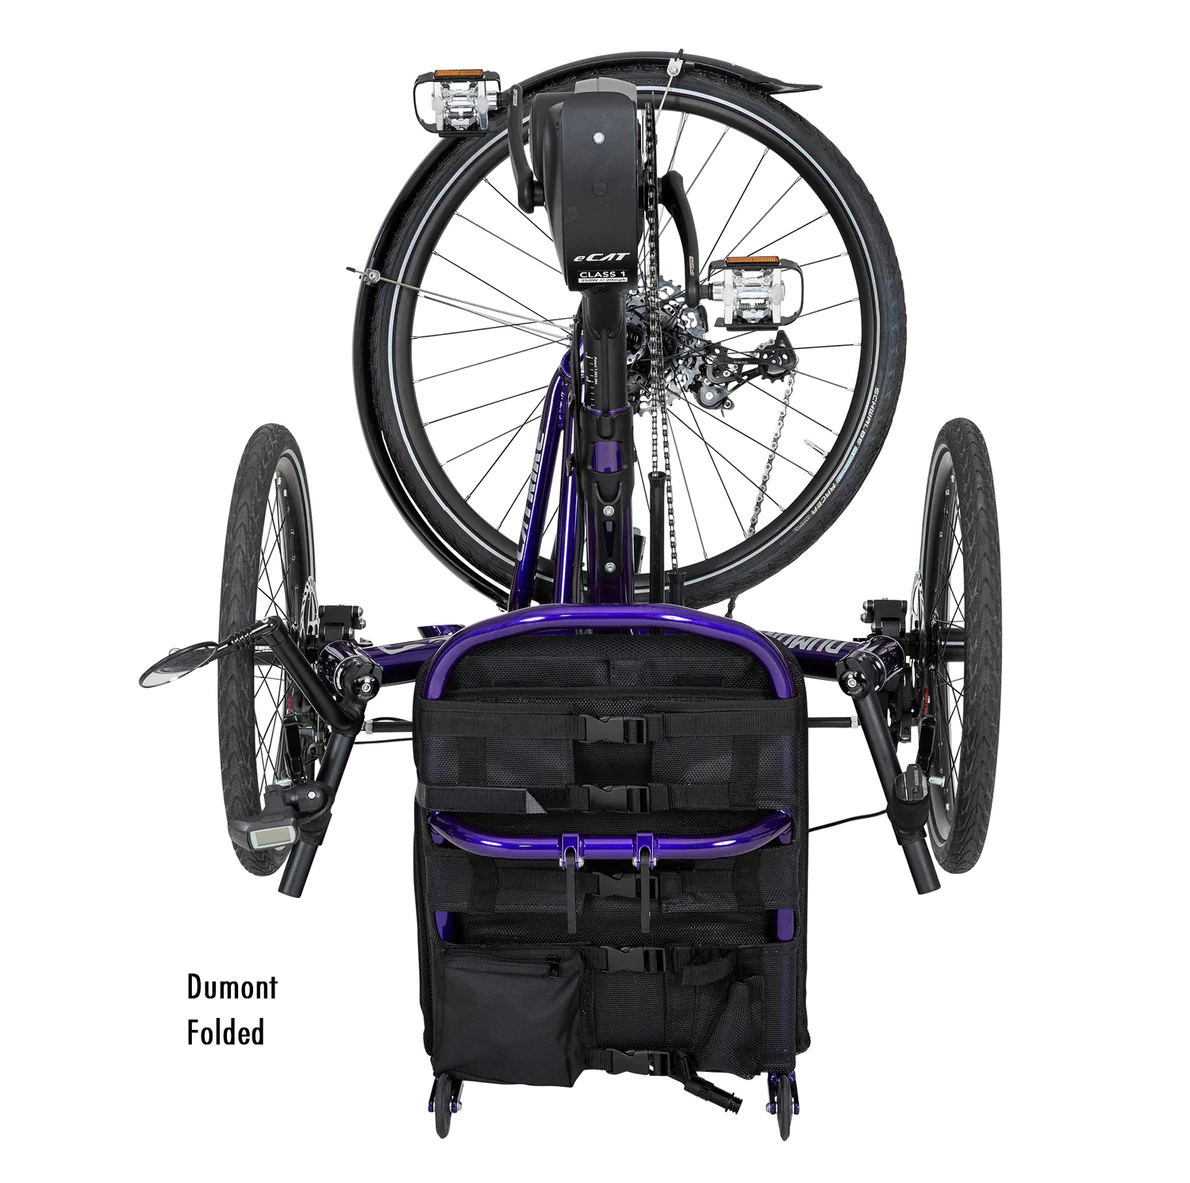 Catrike Dumont Bosch eCAT with purple frame in folded position.